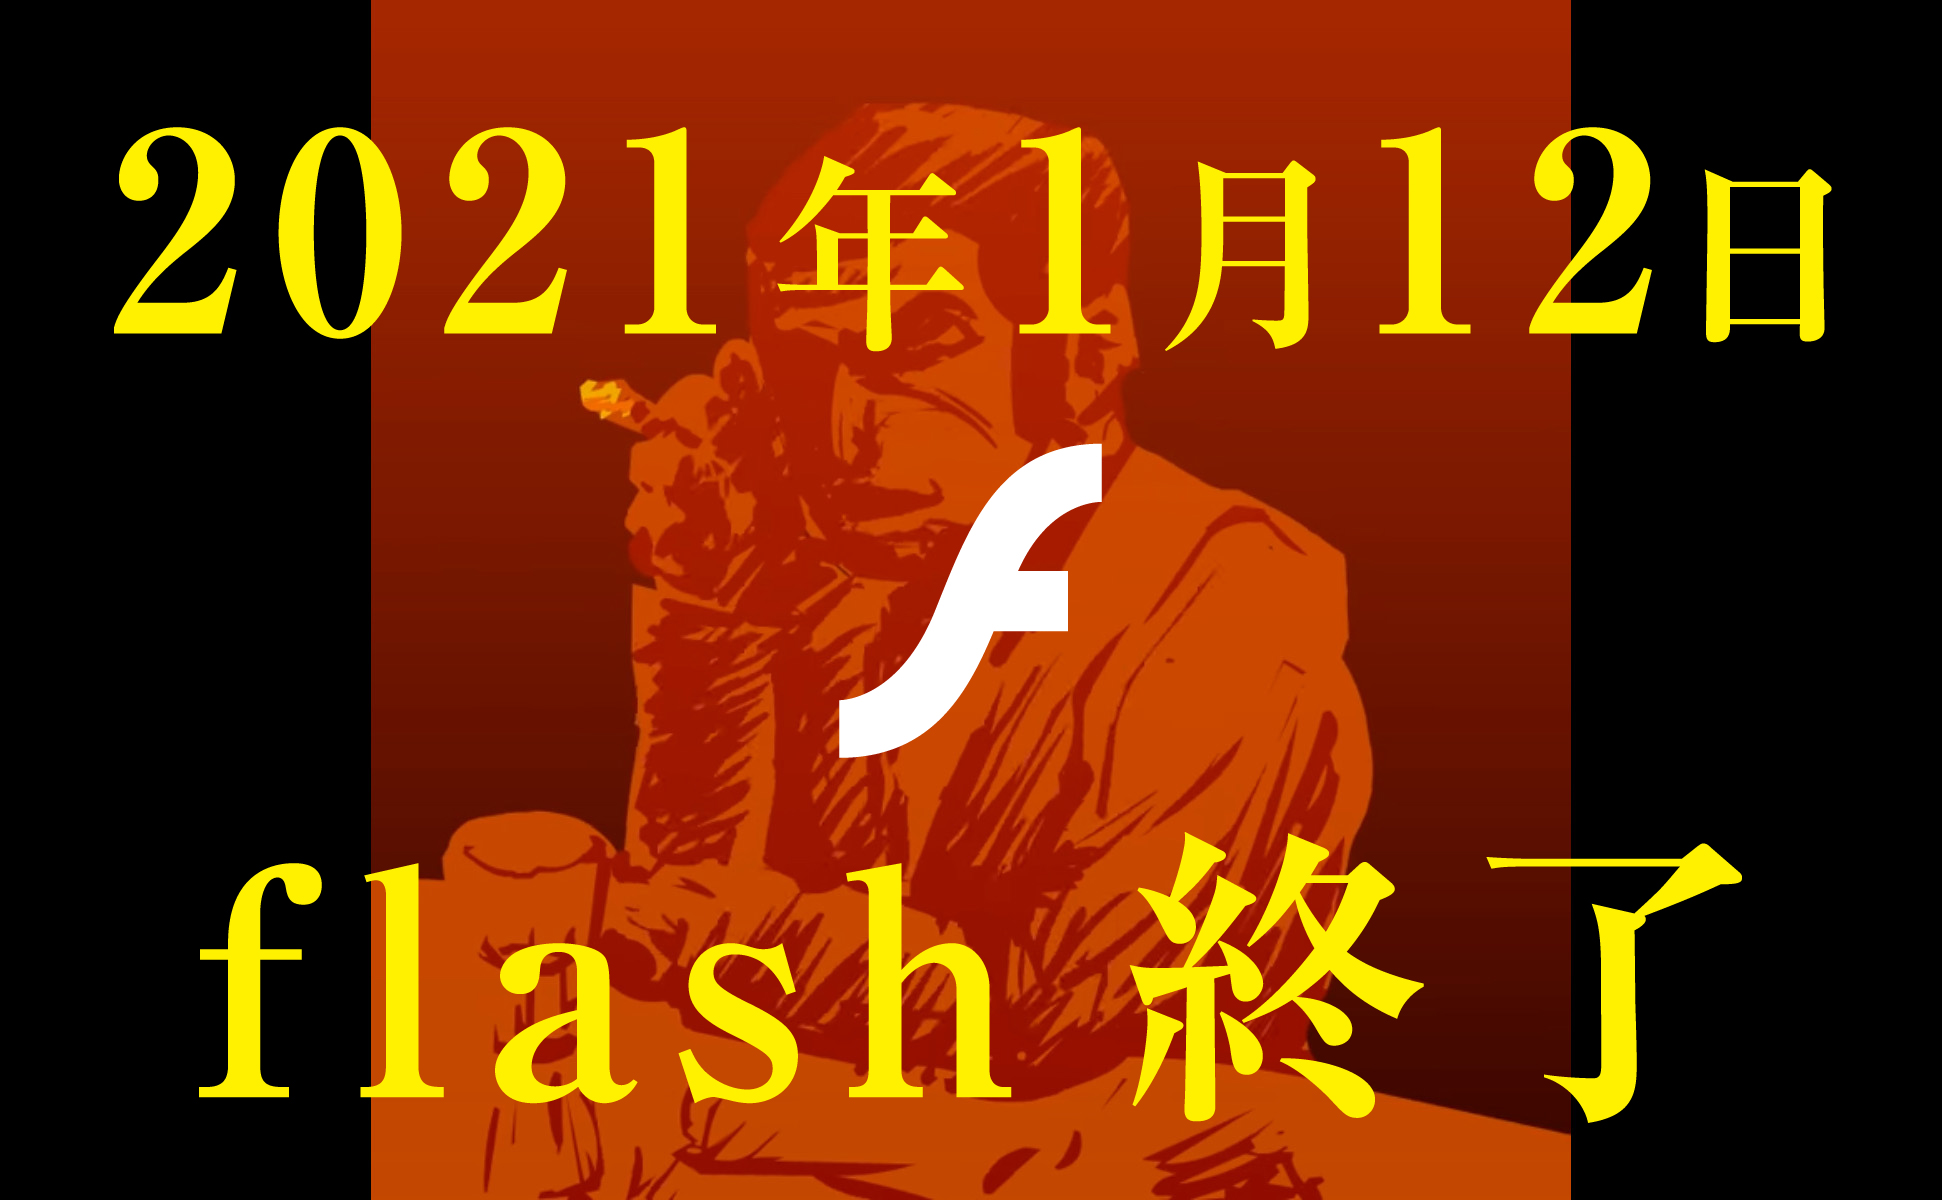 2021年1月12日flash終了